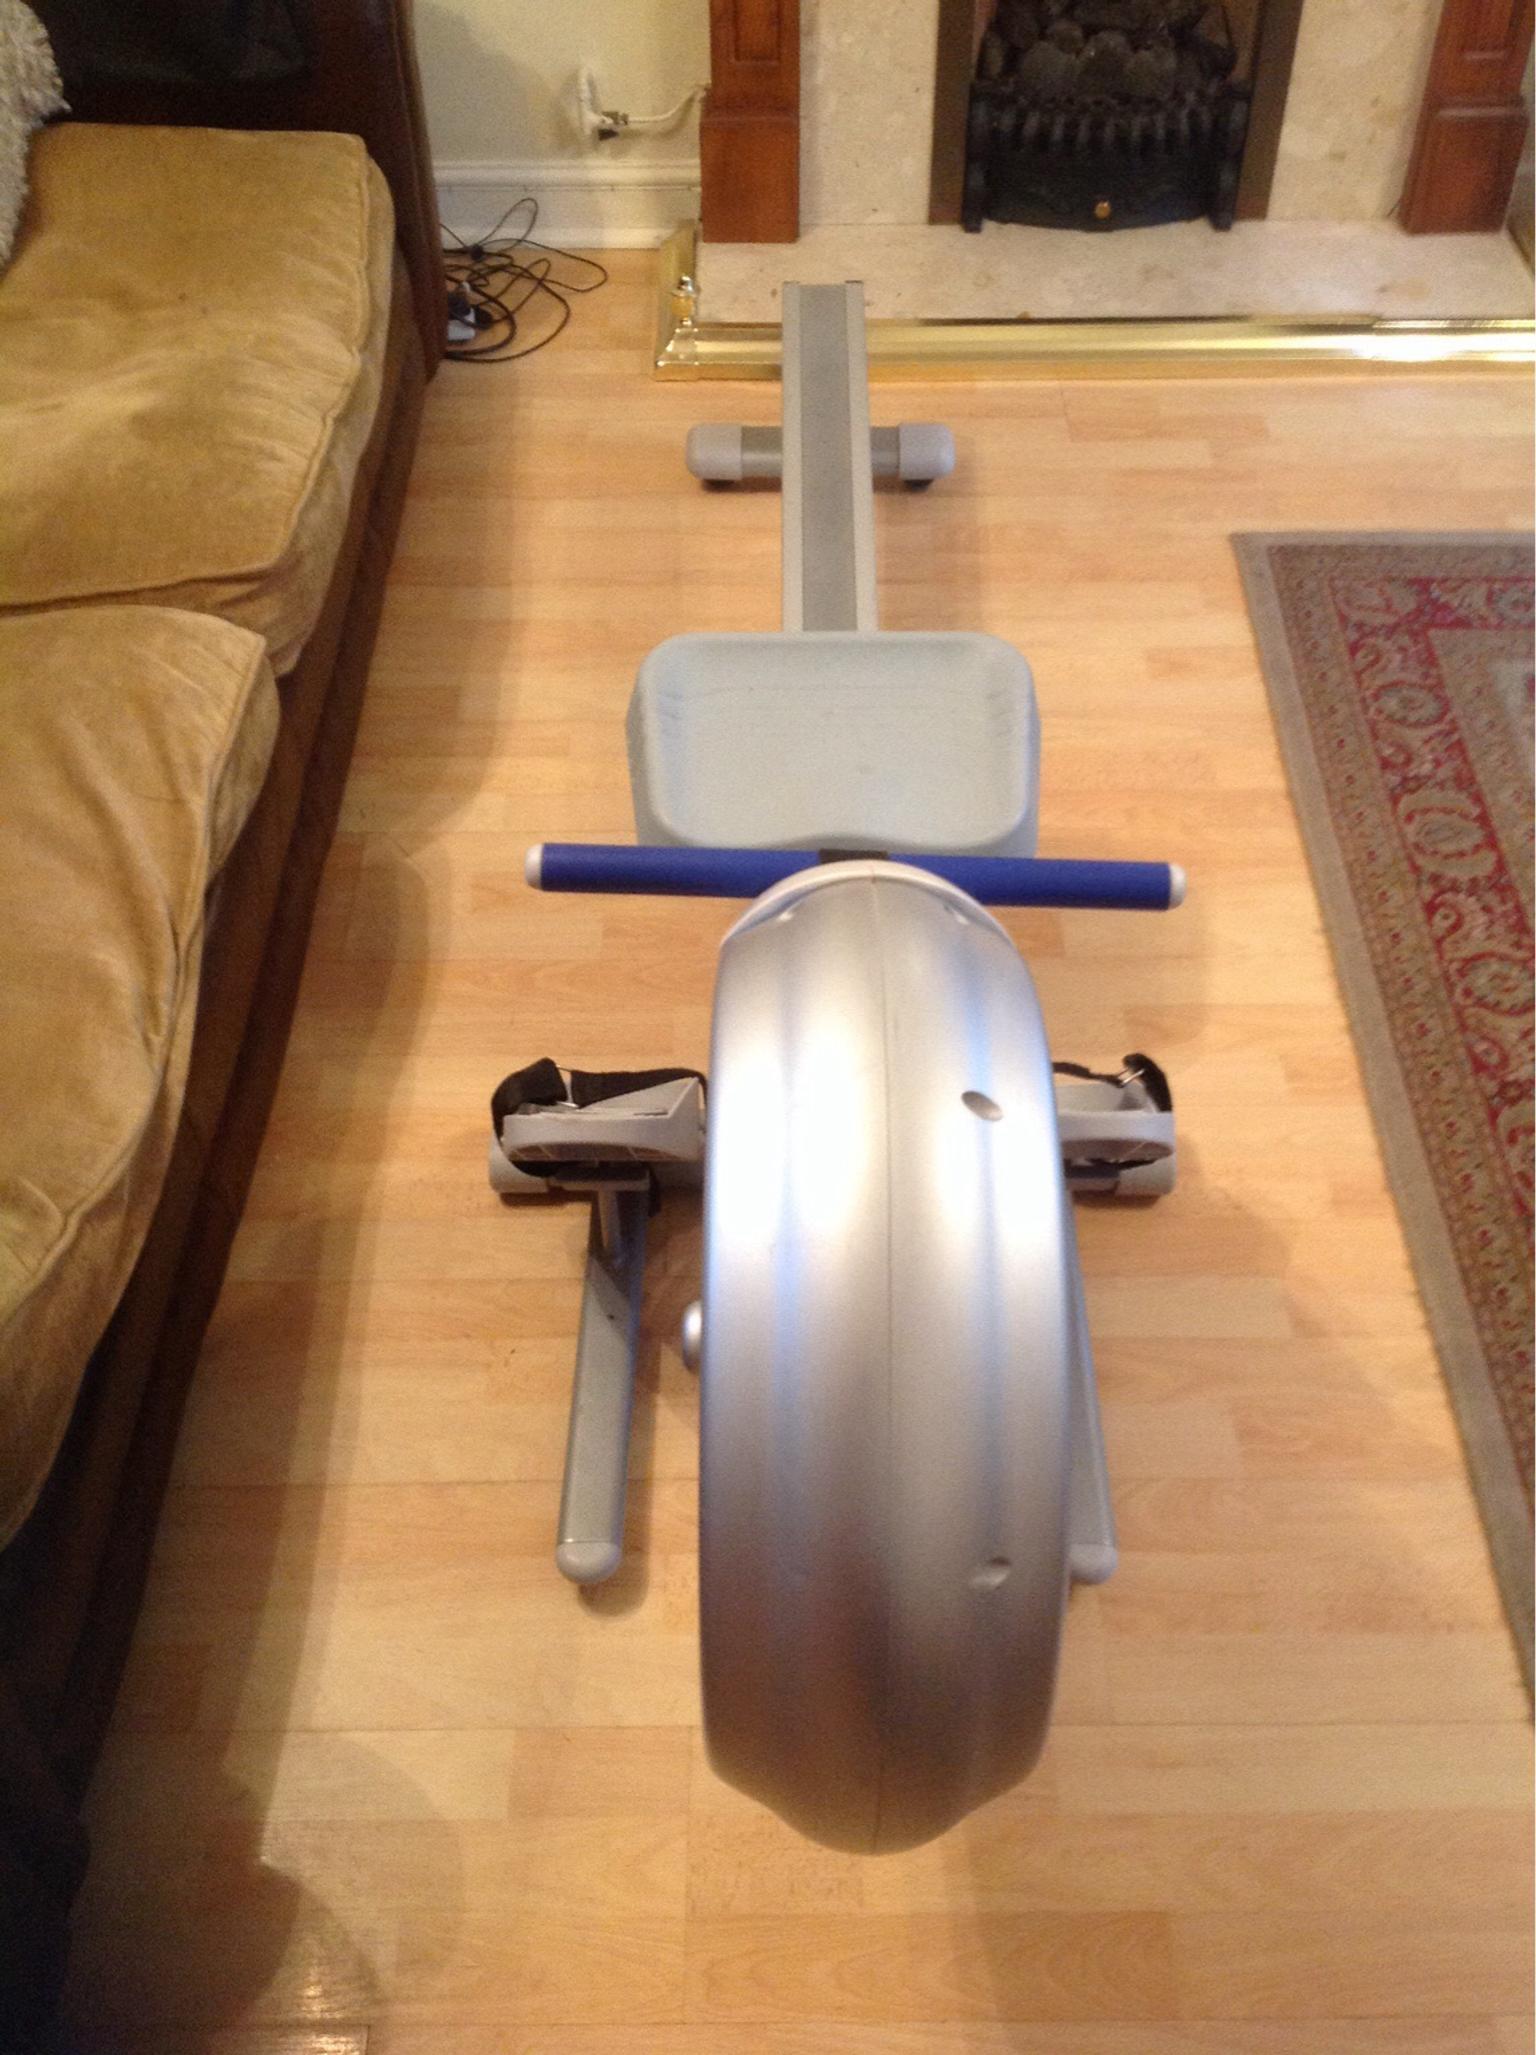 reebok fusion rowing machine